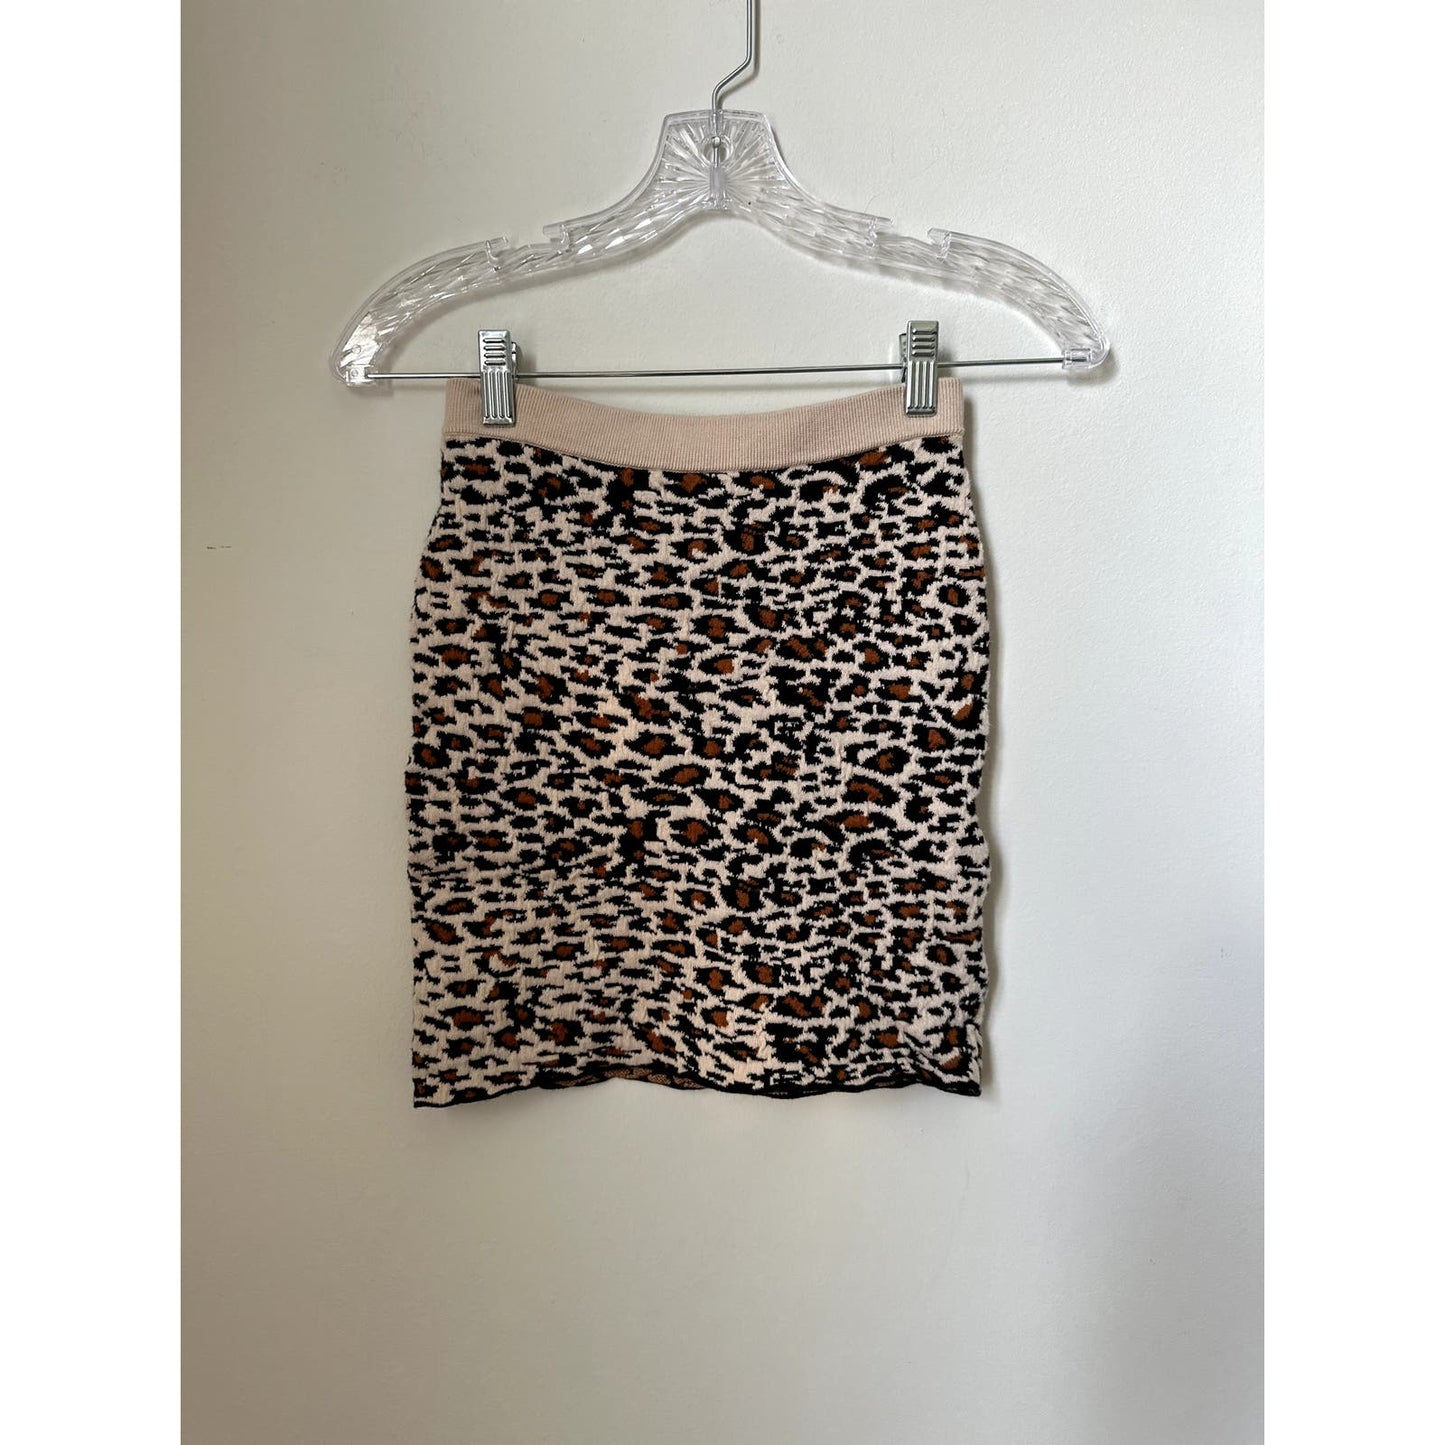 Urban Outfitters Cheetah Print Mini Skirt, Size Small